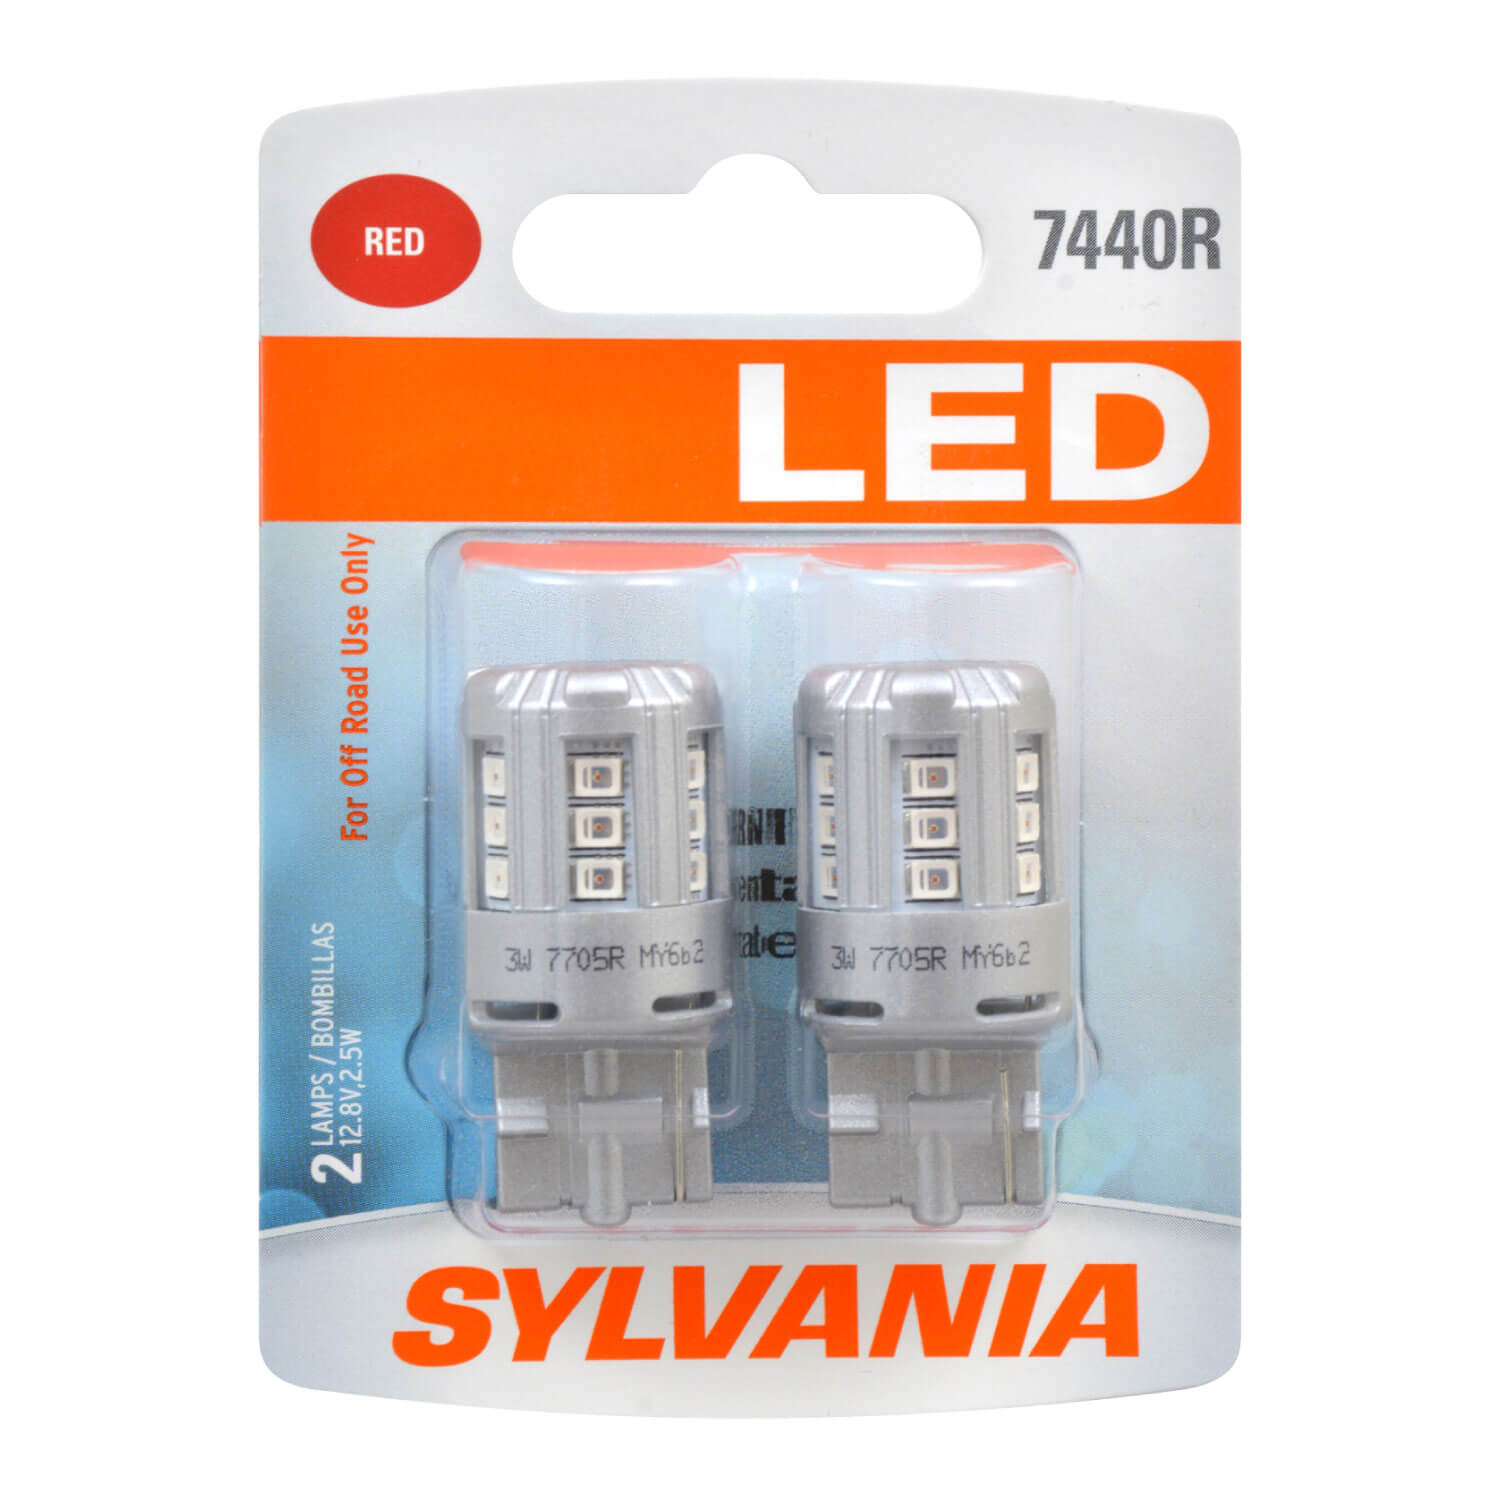 SYLVANIA 7440R RED SYL LED Mini Bulb, 2 Pack